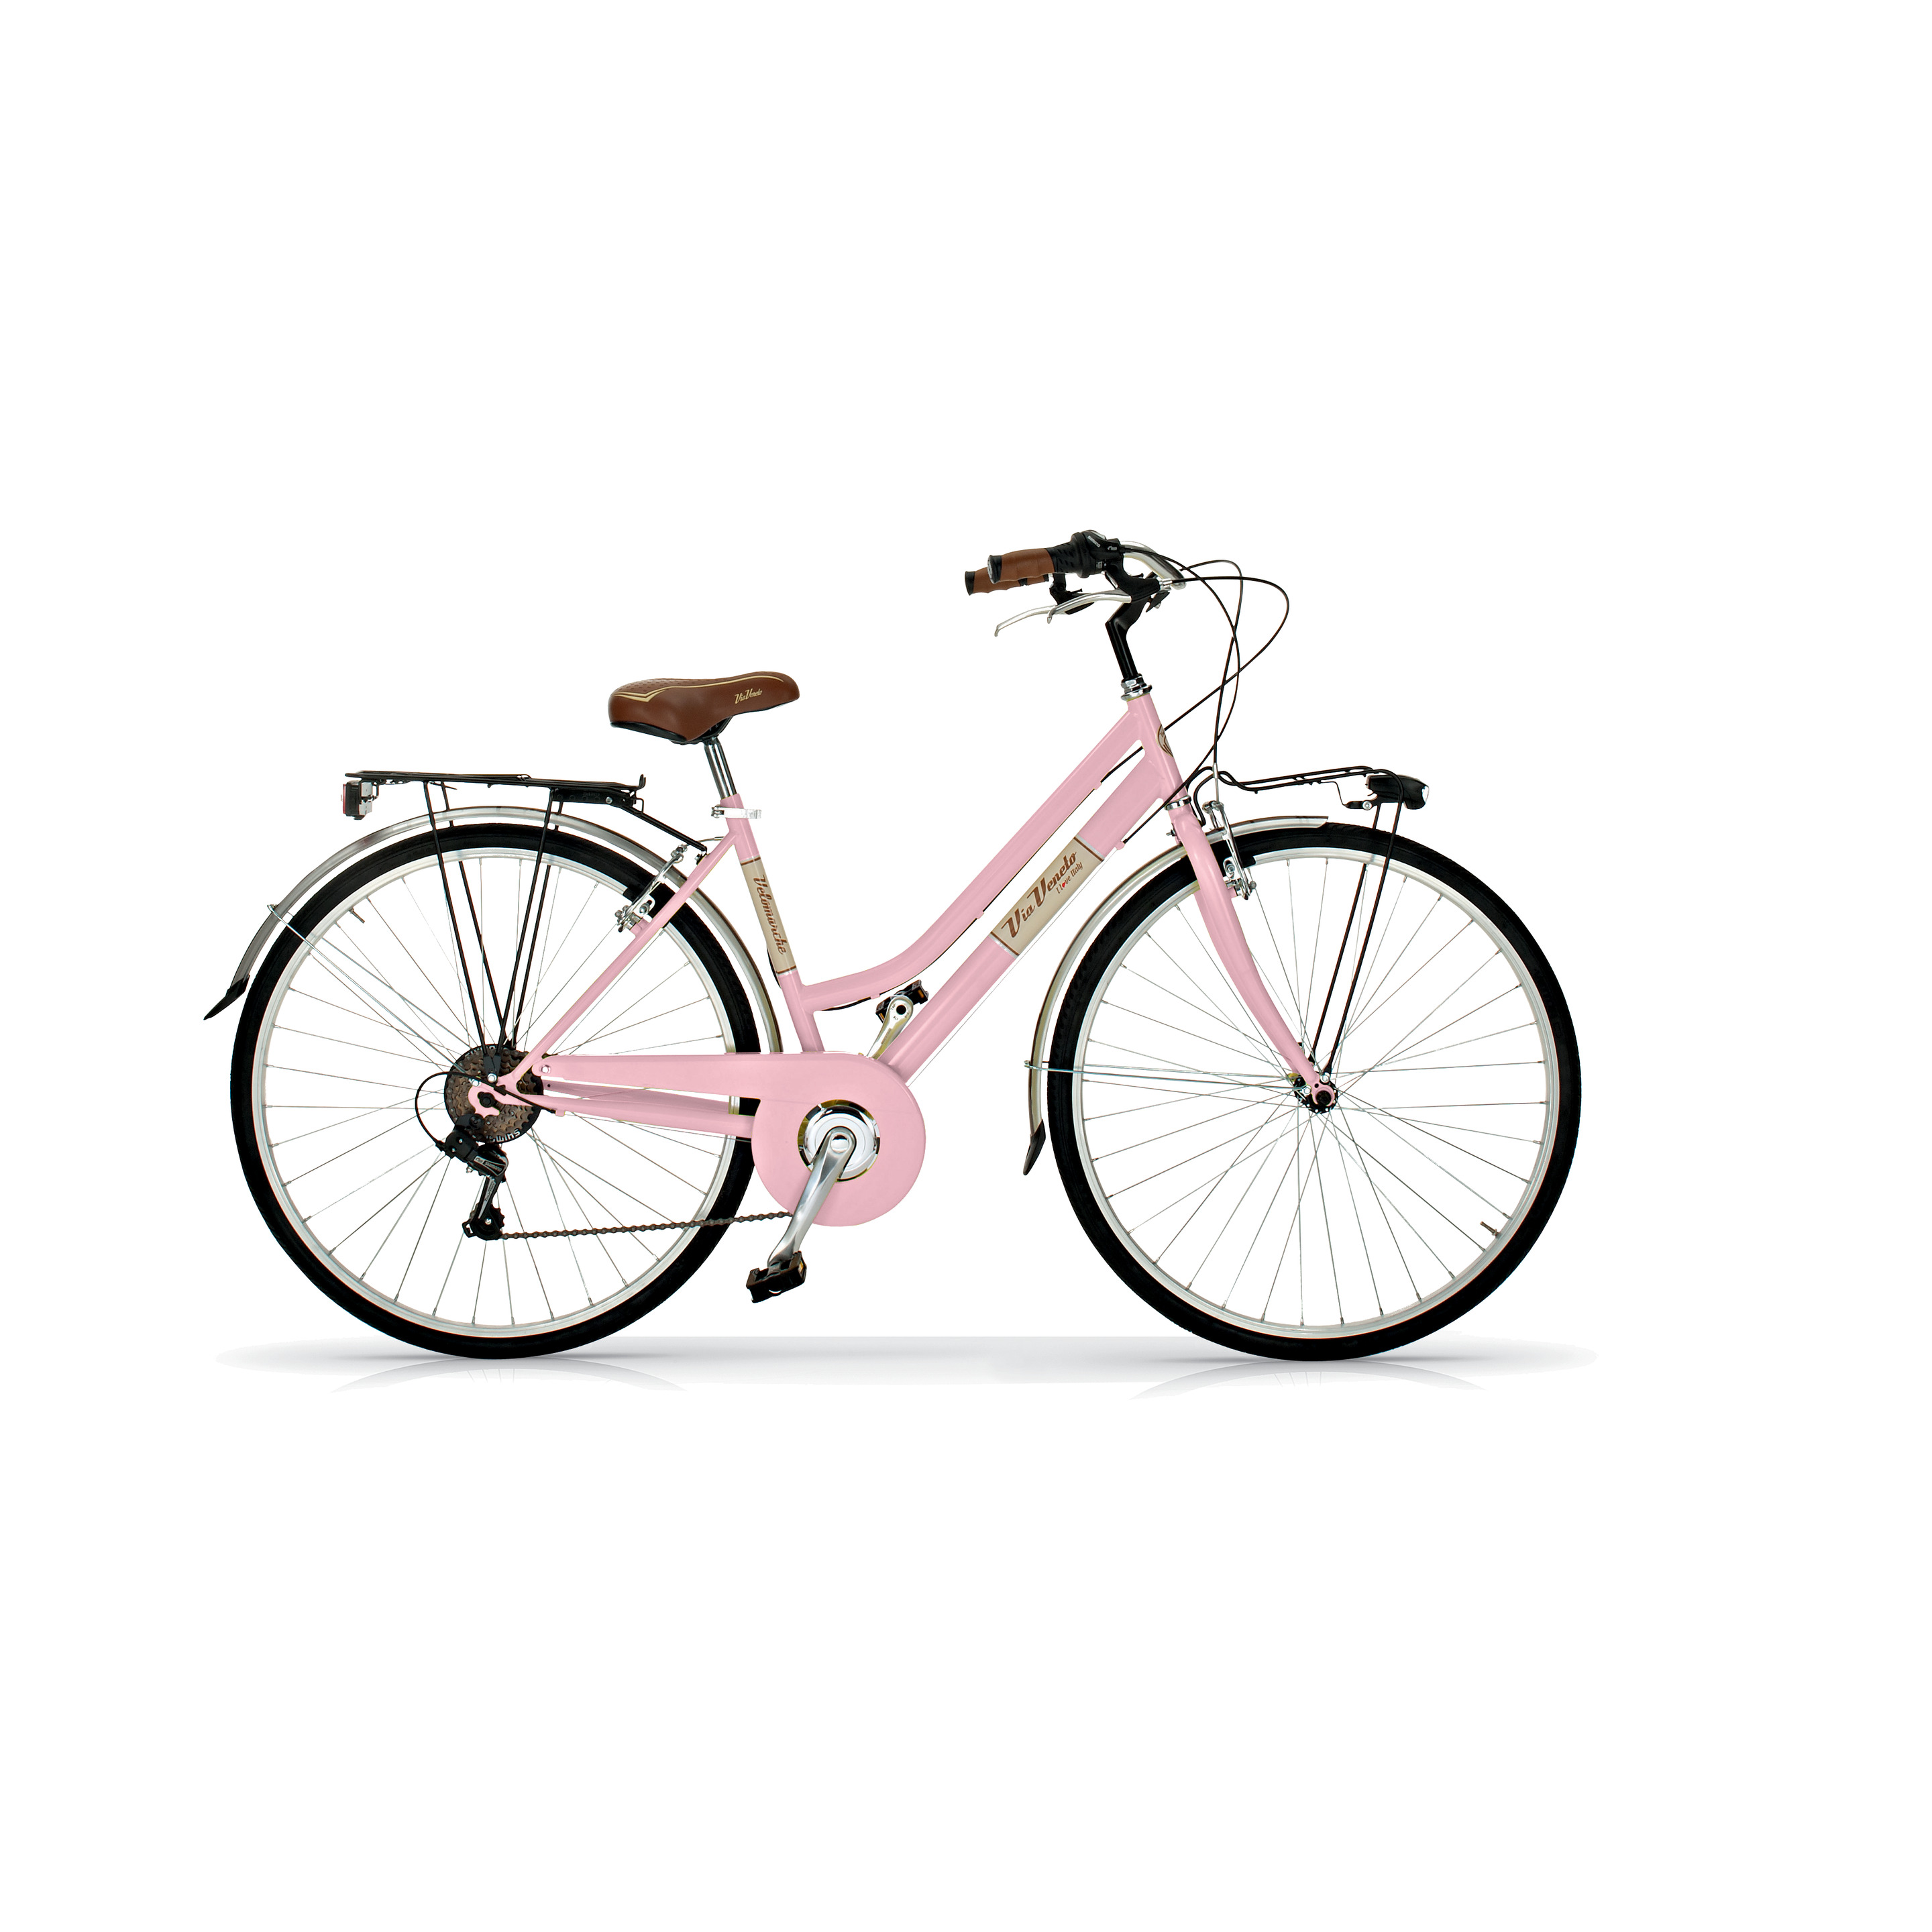 Bicicleta De Paseo Via Veneto 605lady, Cuadro De Acero, Ruedas De 700x35c, 6 Velocidades Rosa